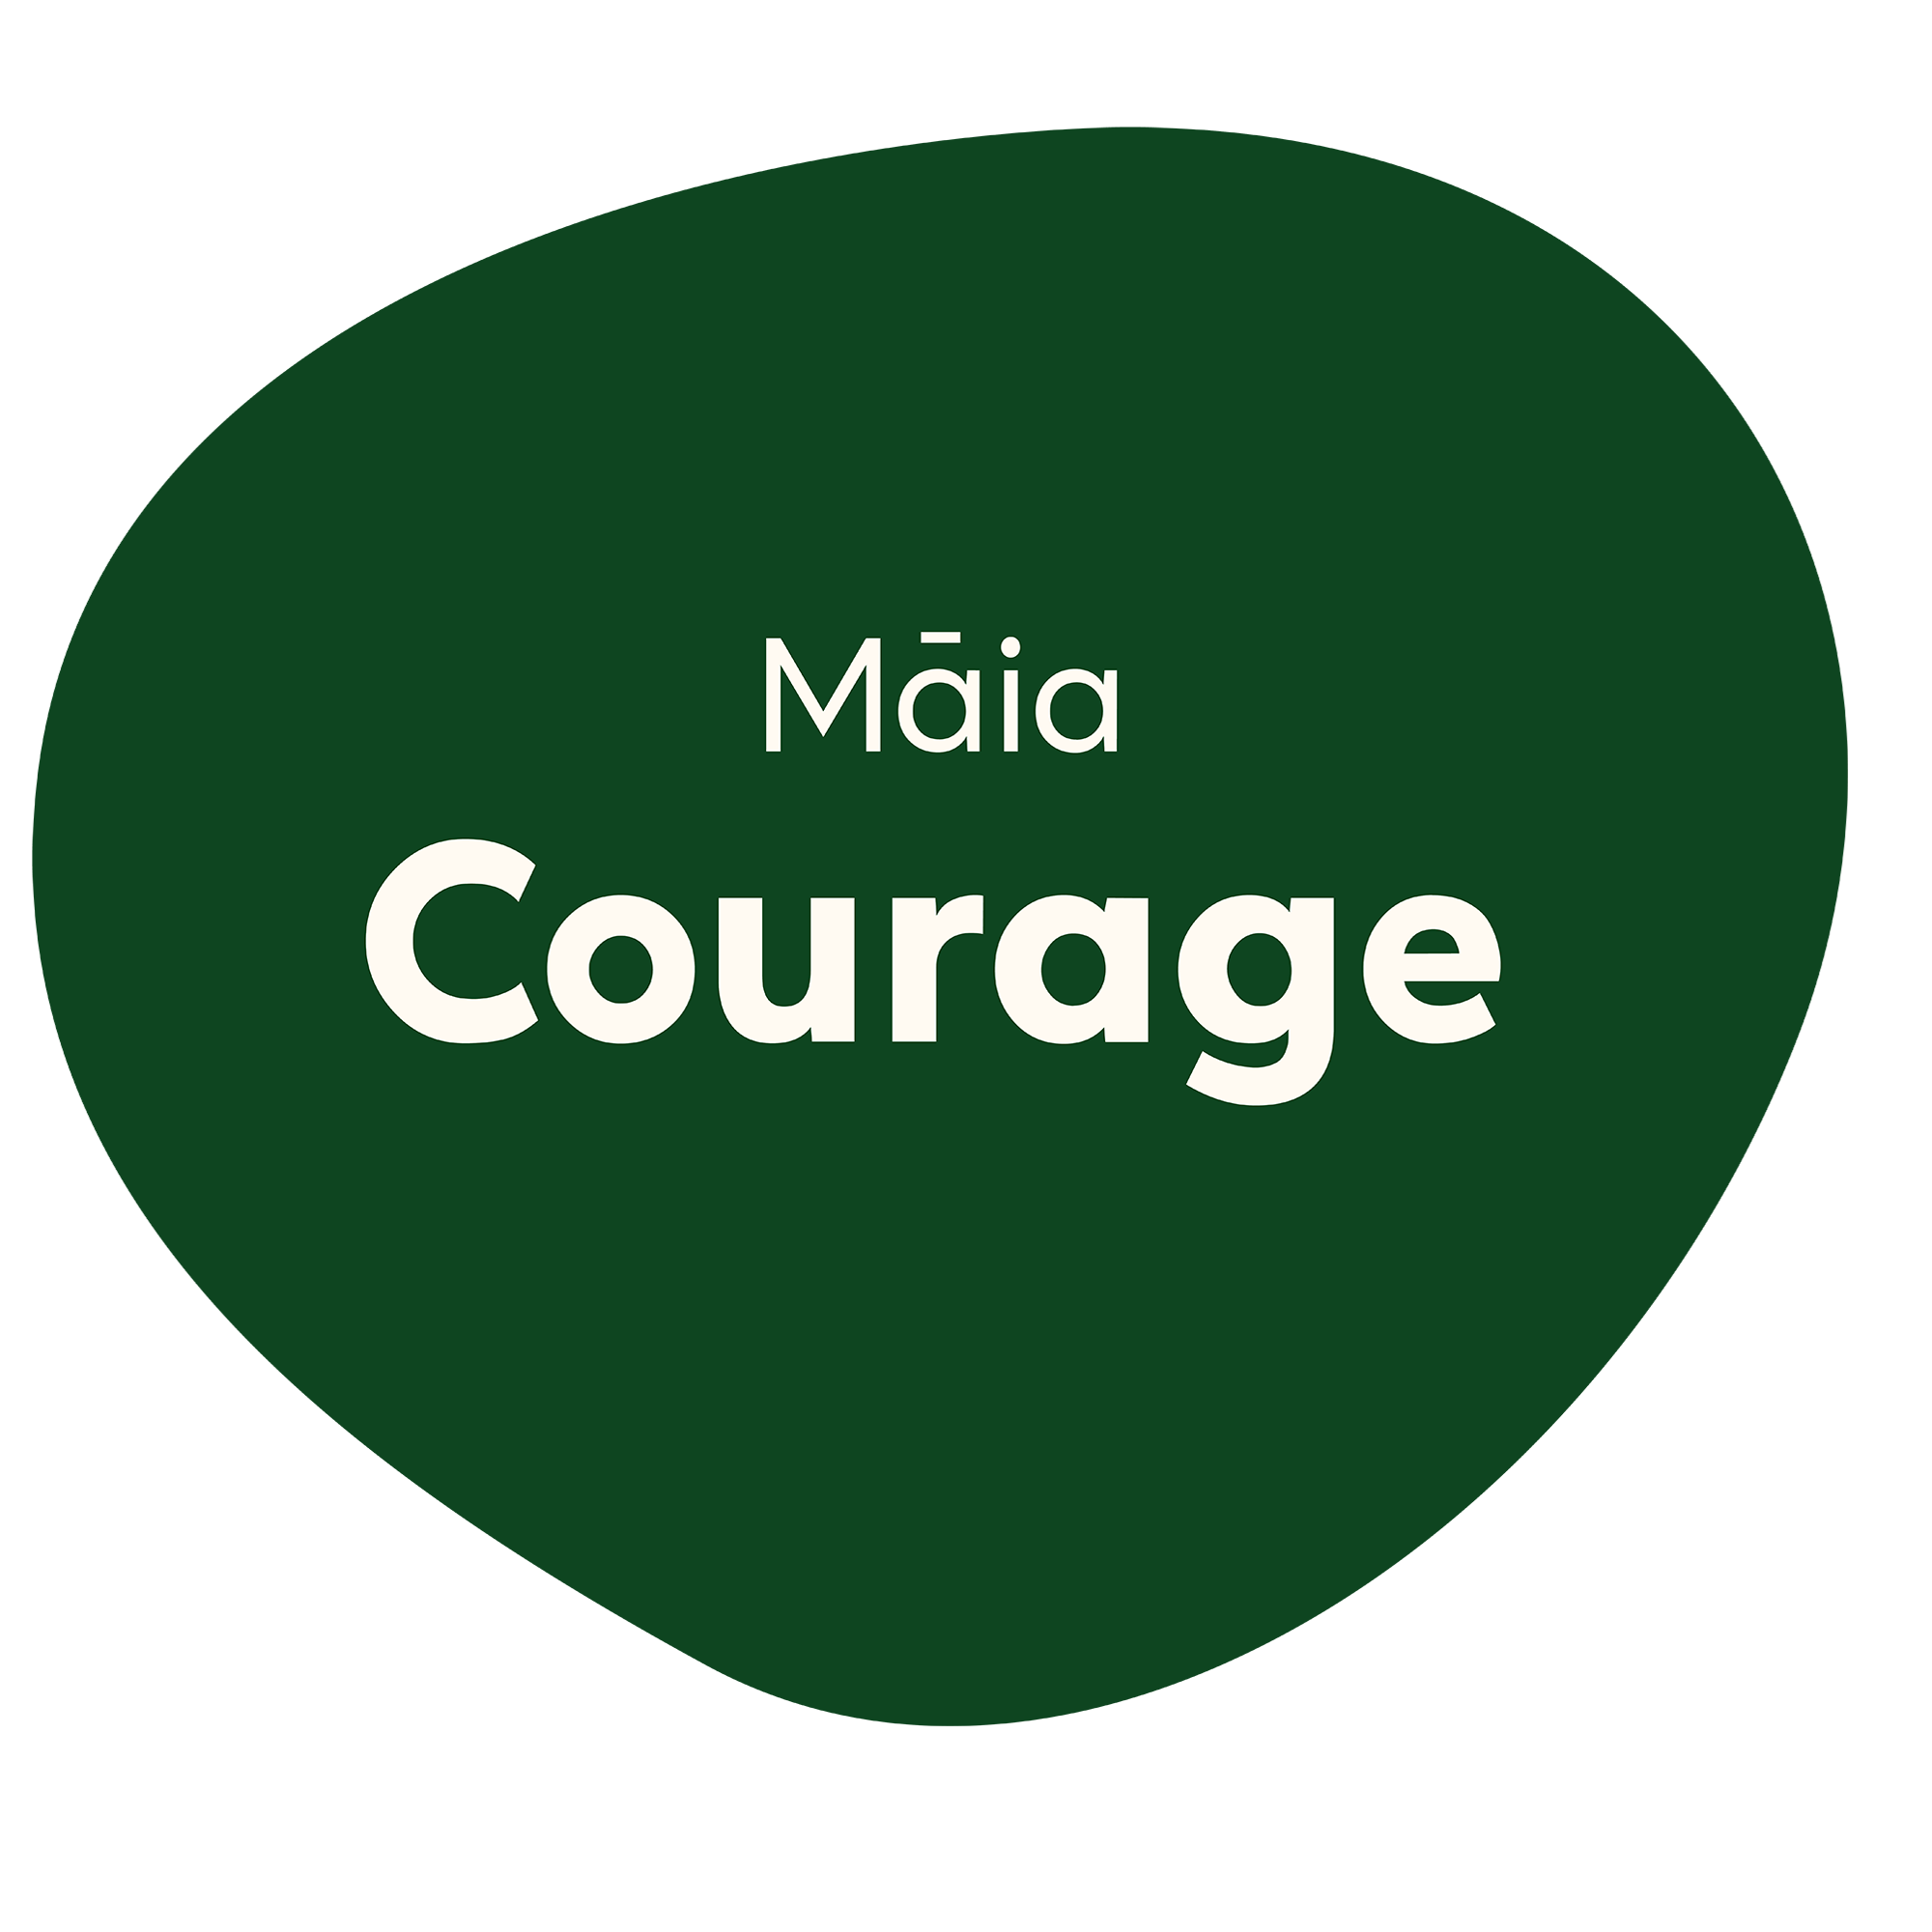 Courage - Maia